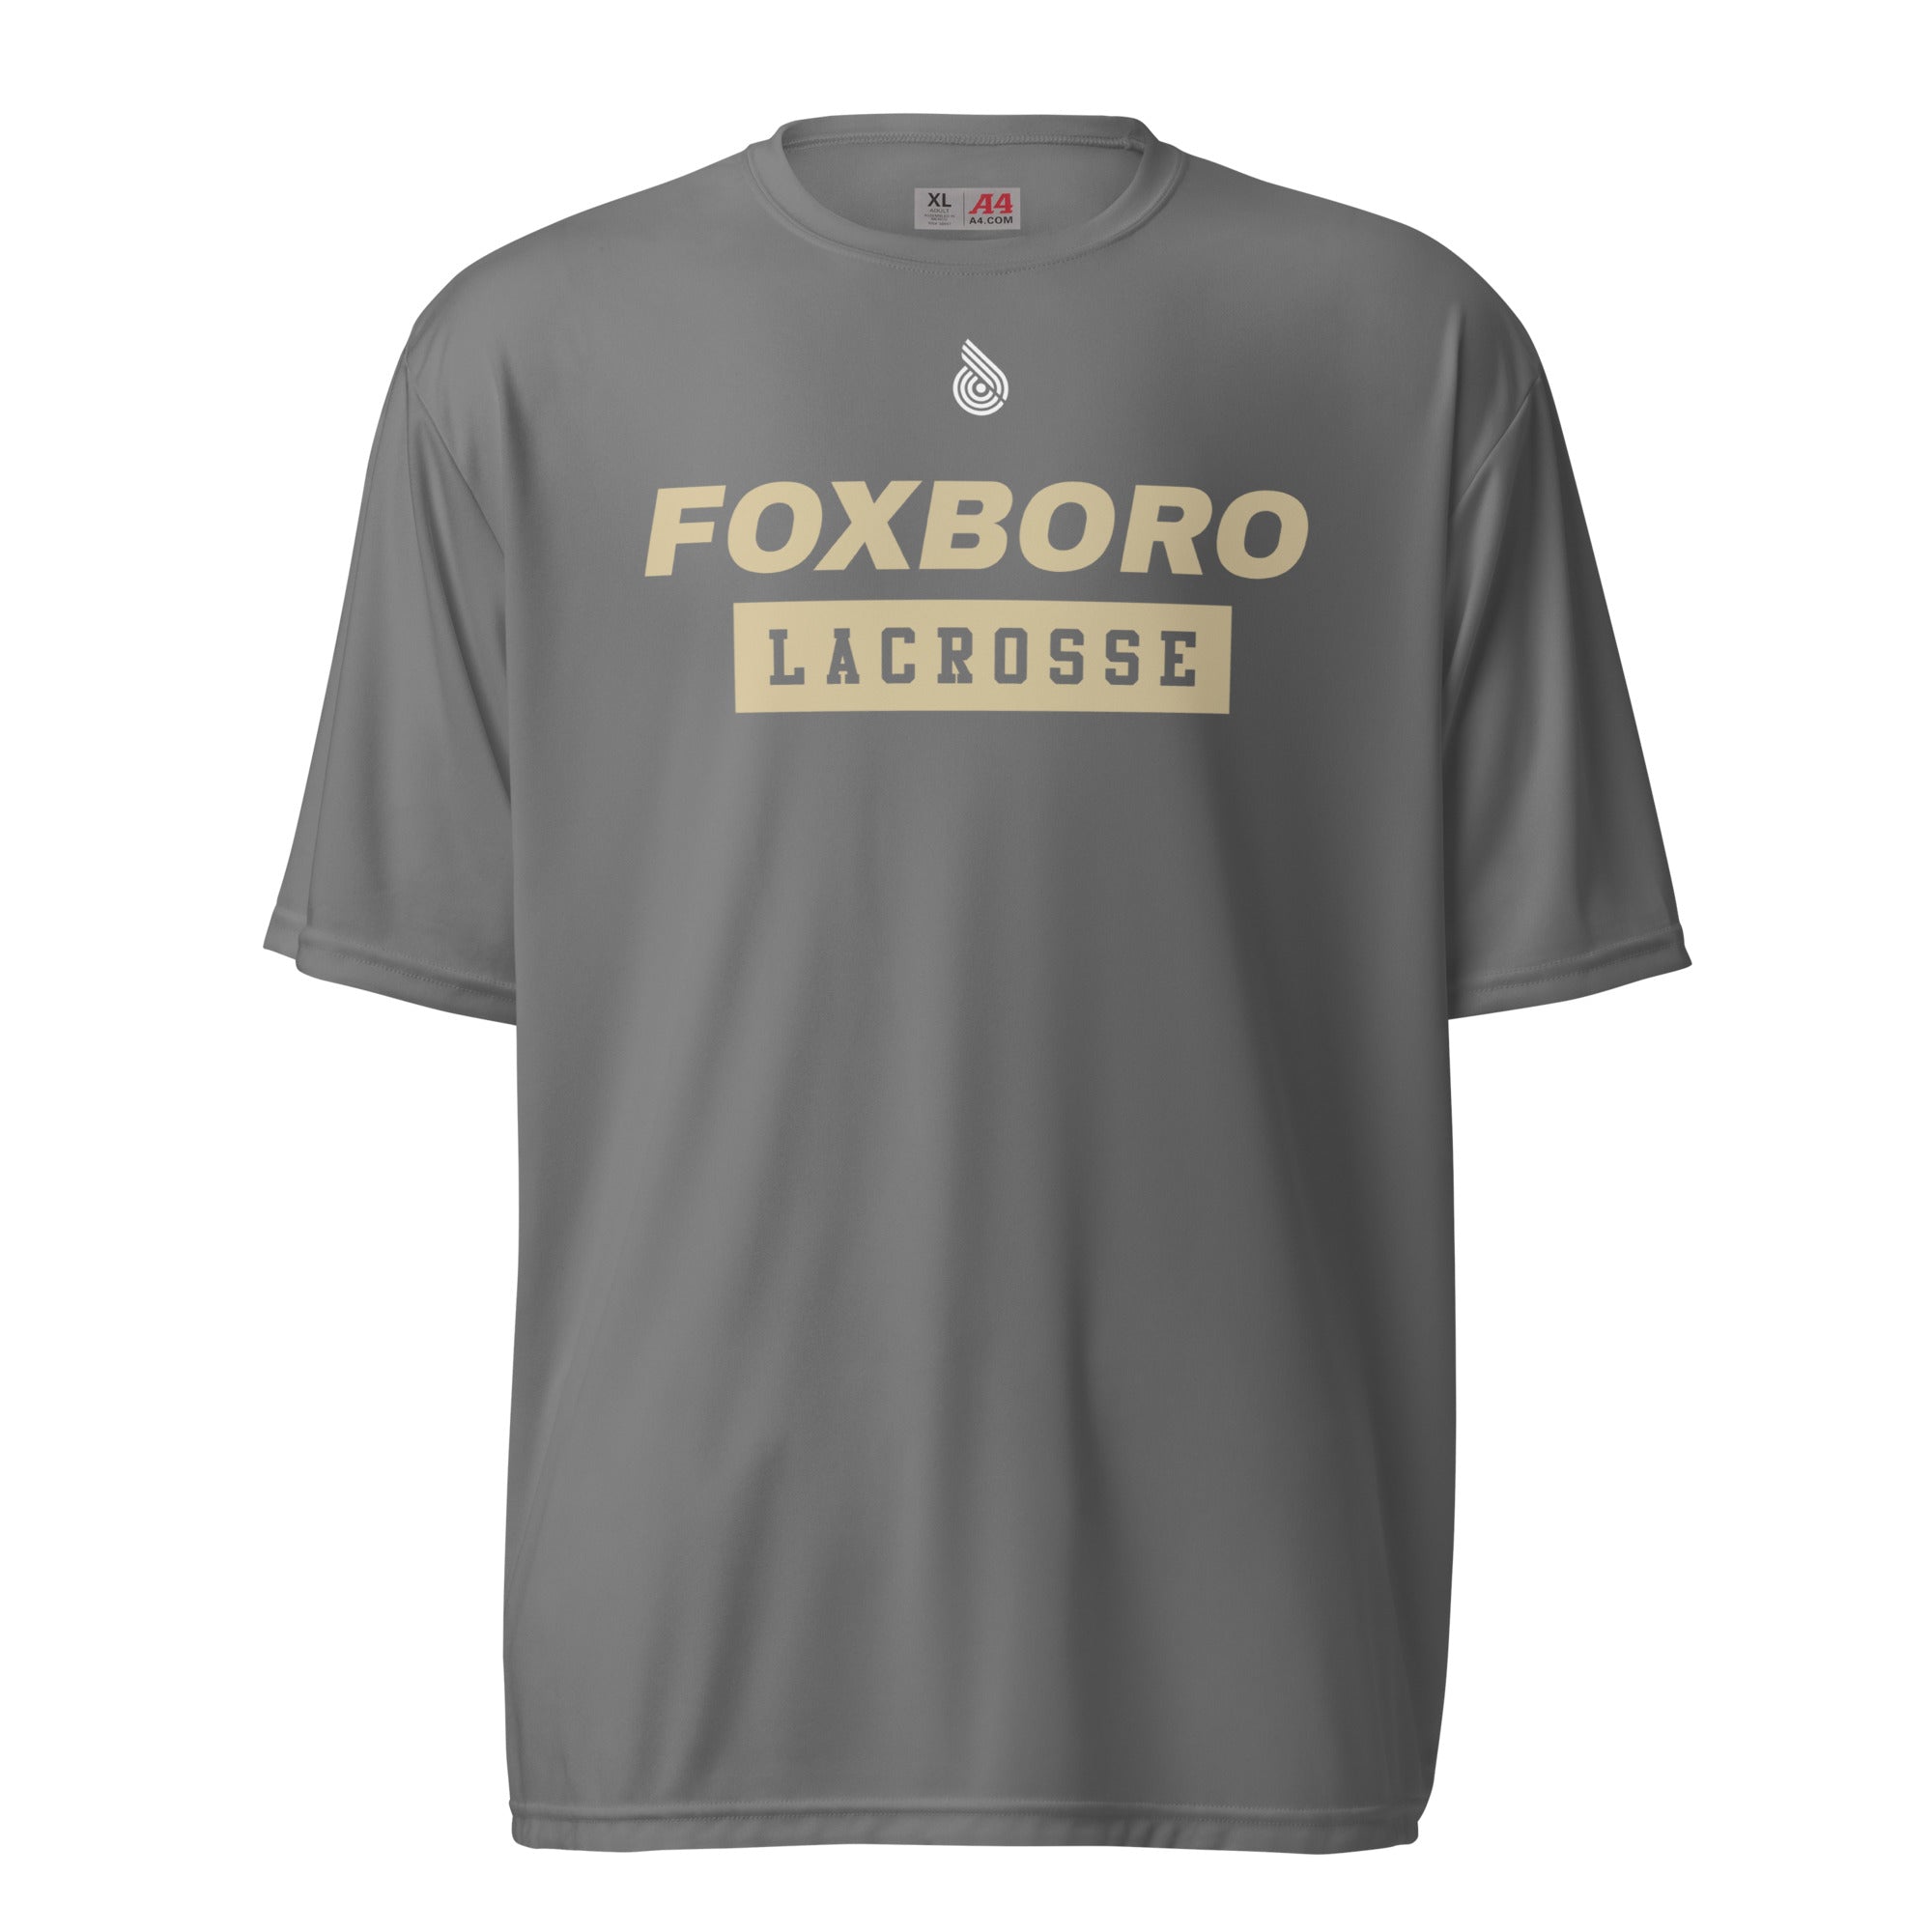 Foxboro Unisex performance t-shirt